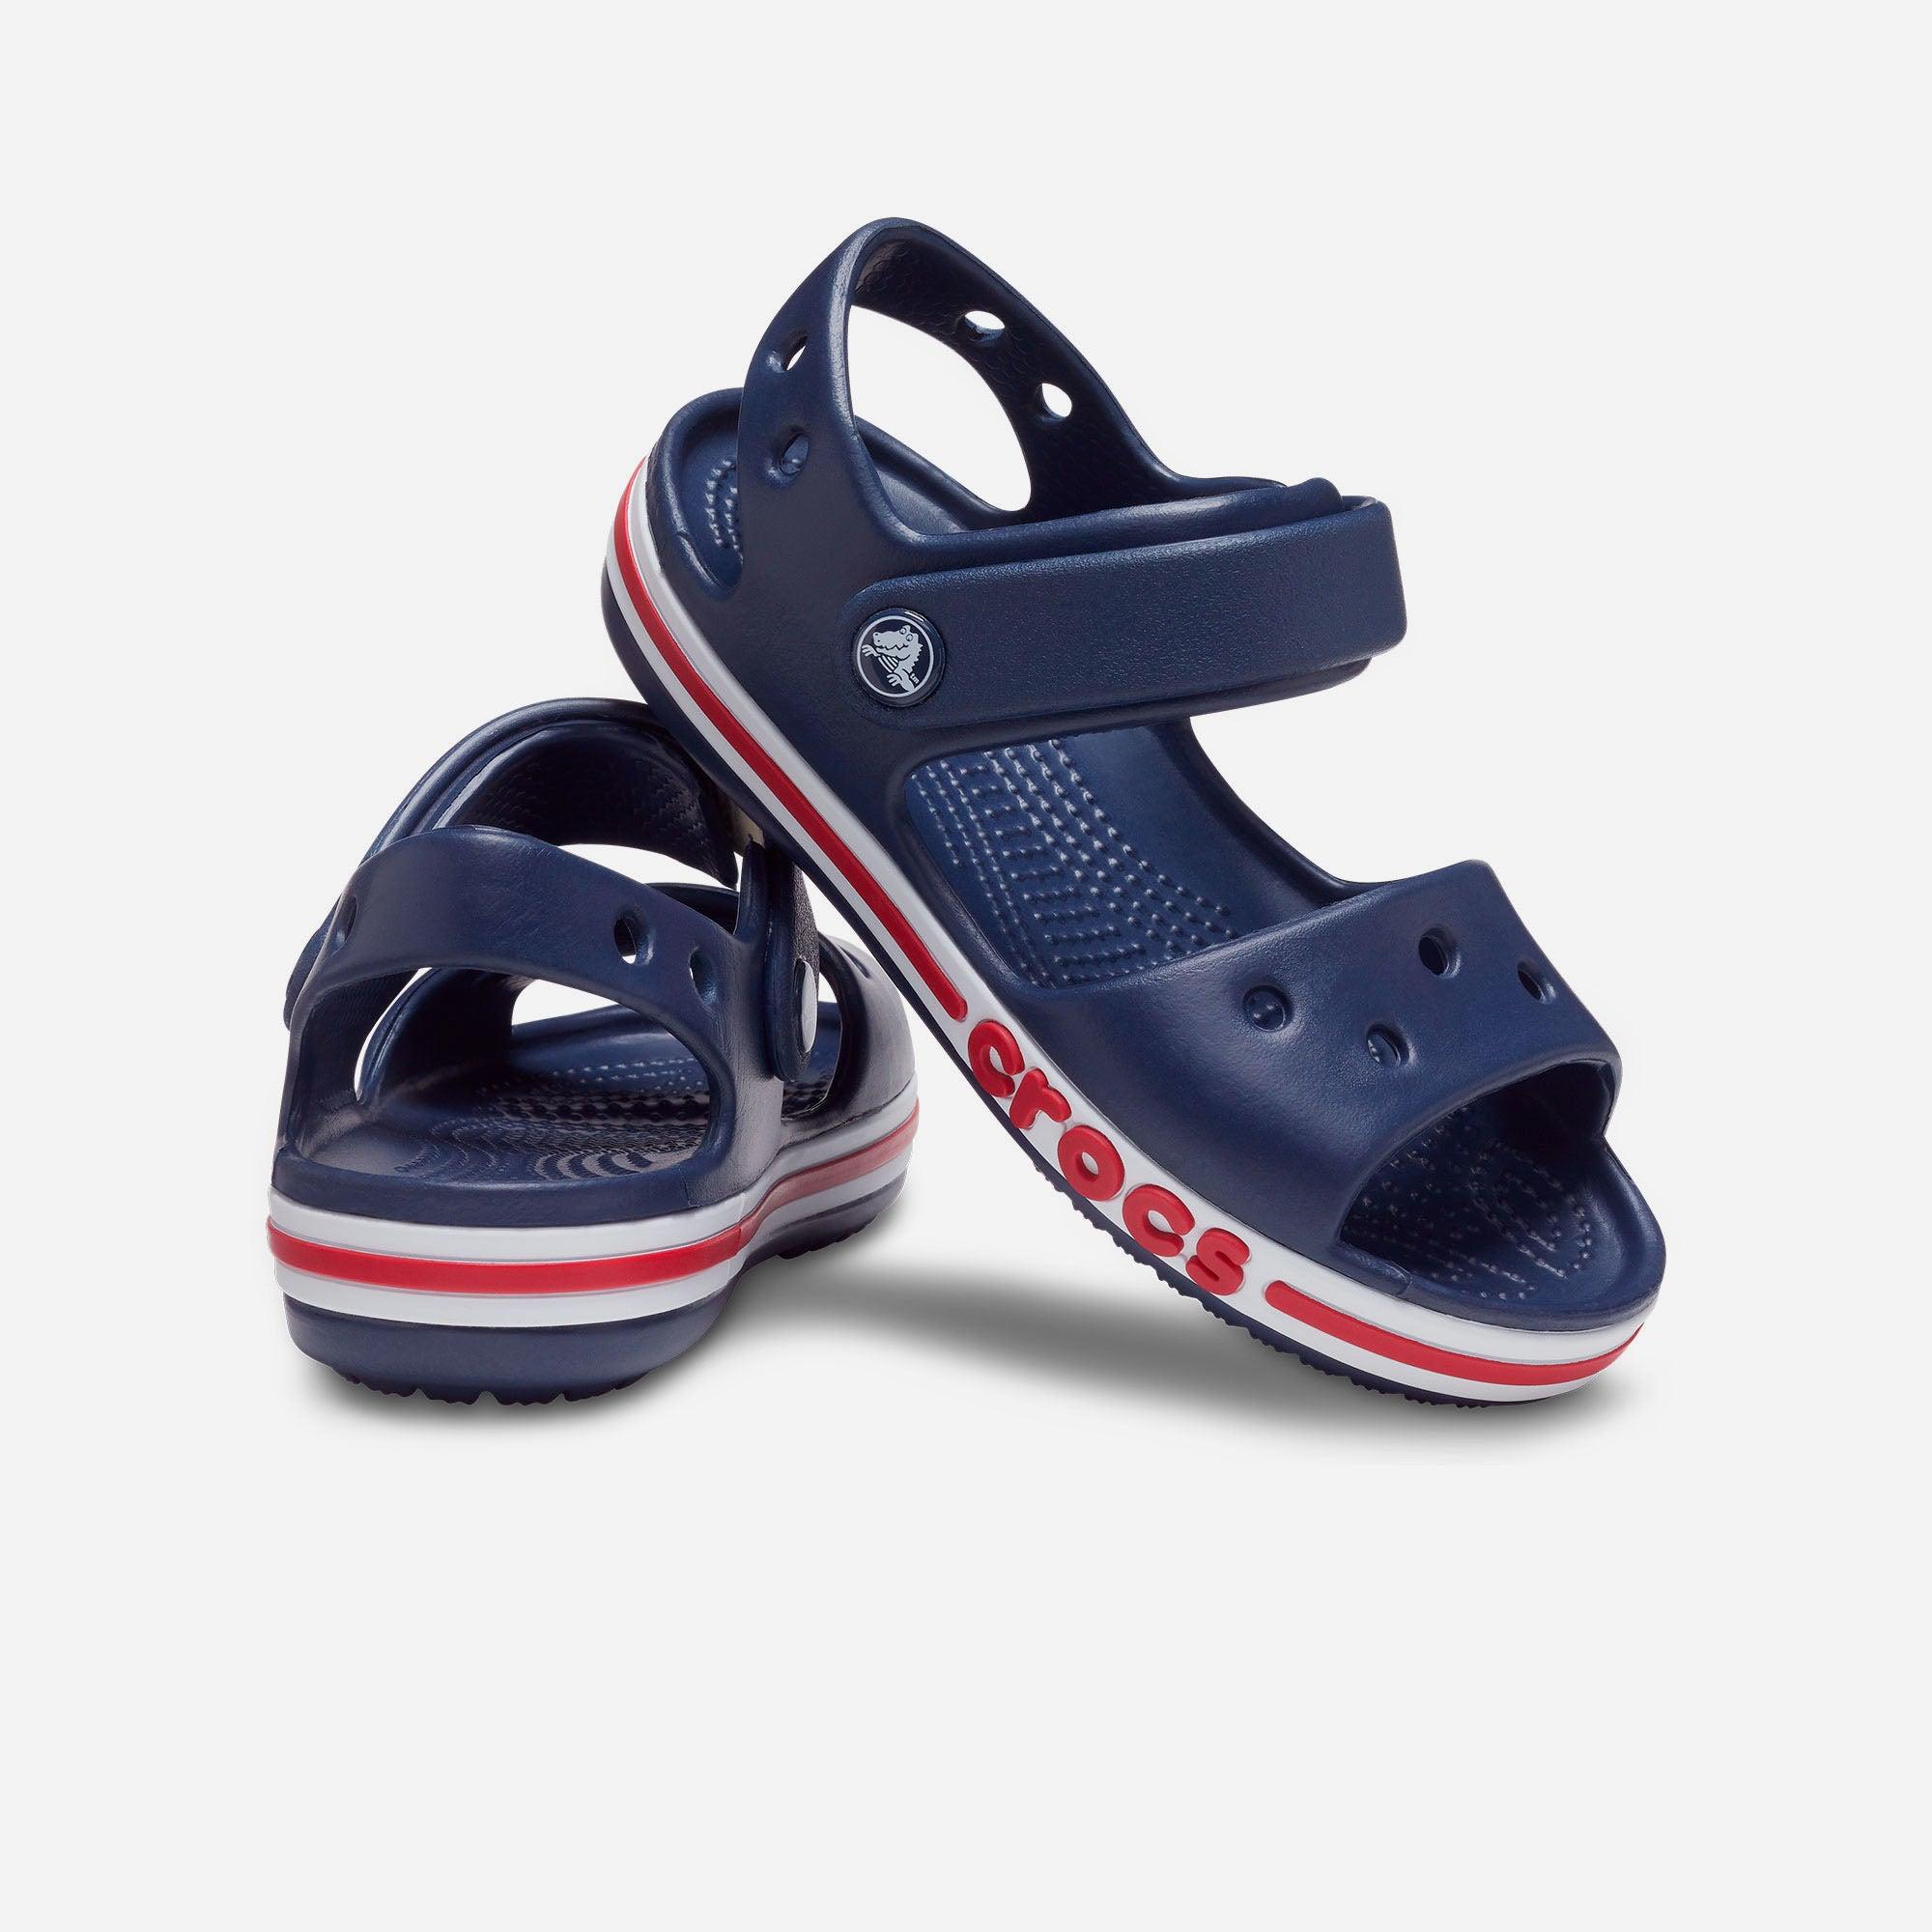 Giày sandal trẻ em Crocs Bayaband - 205400-4CC